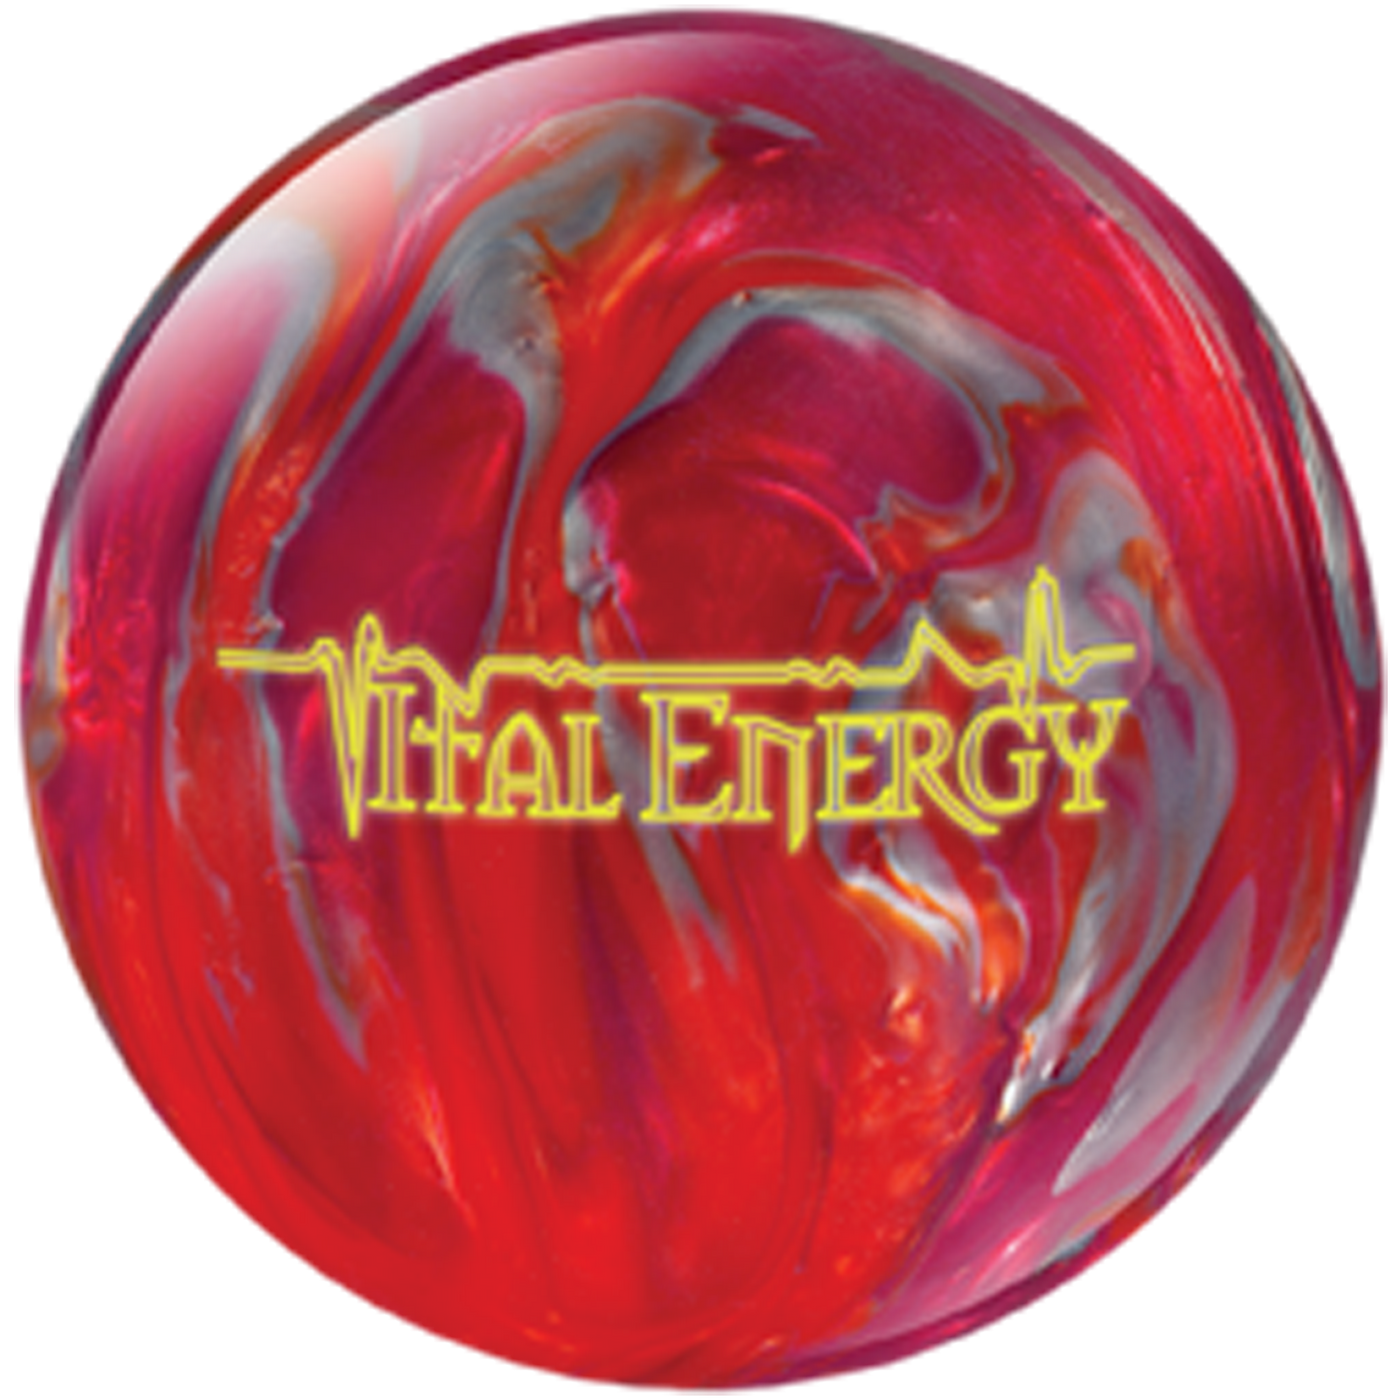 Vital Energy Bowling Ball